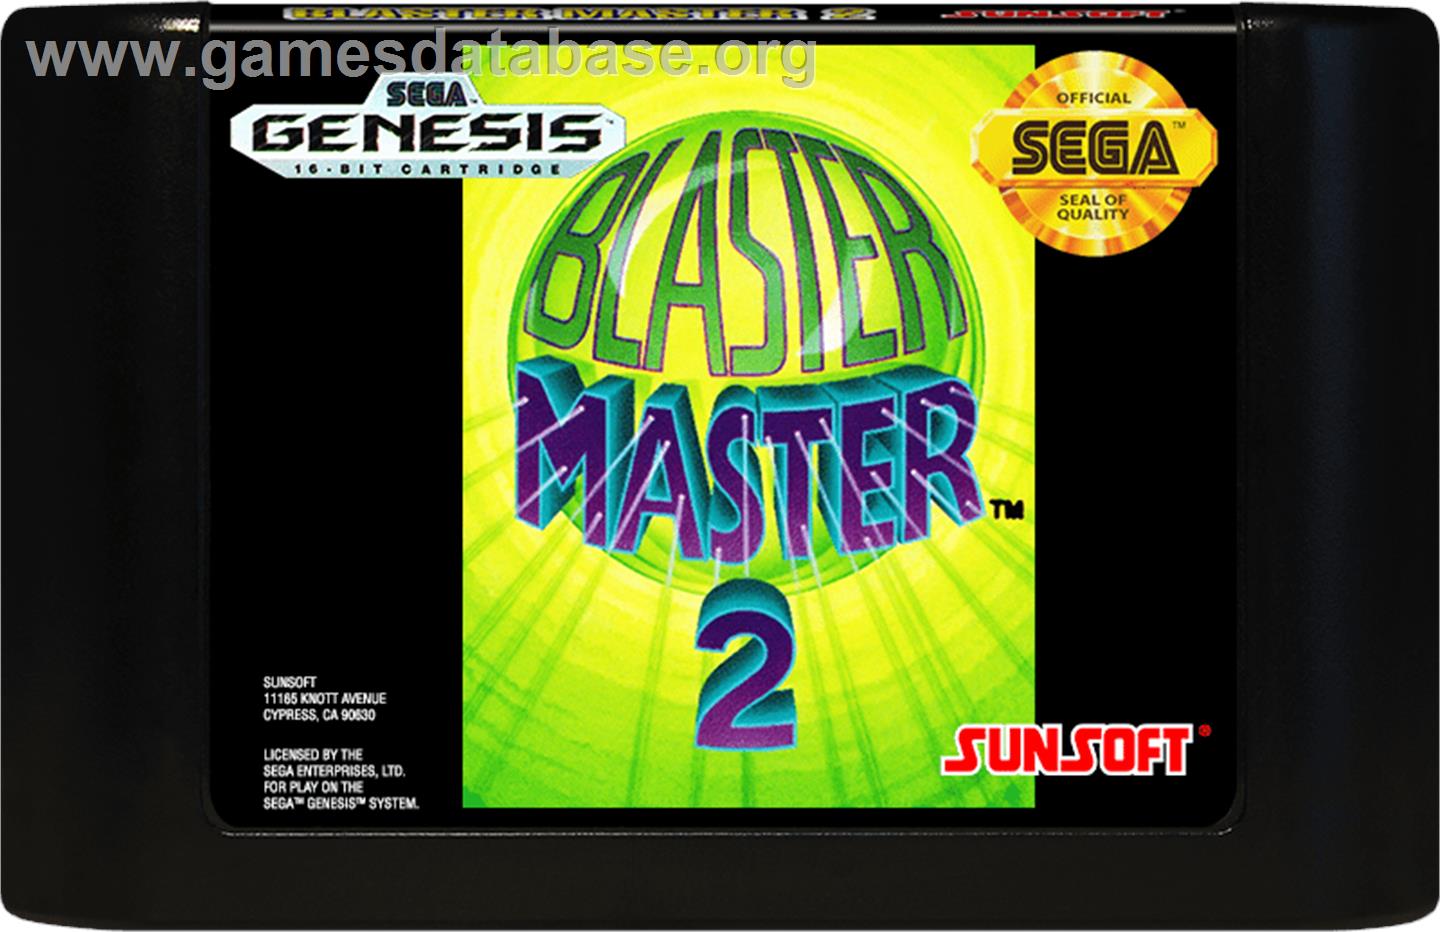 Blaster Master 2 - Sega Genesis - Artwork - Cartridge